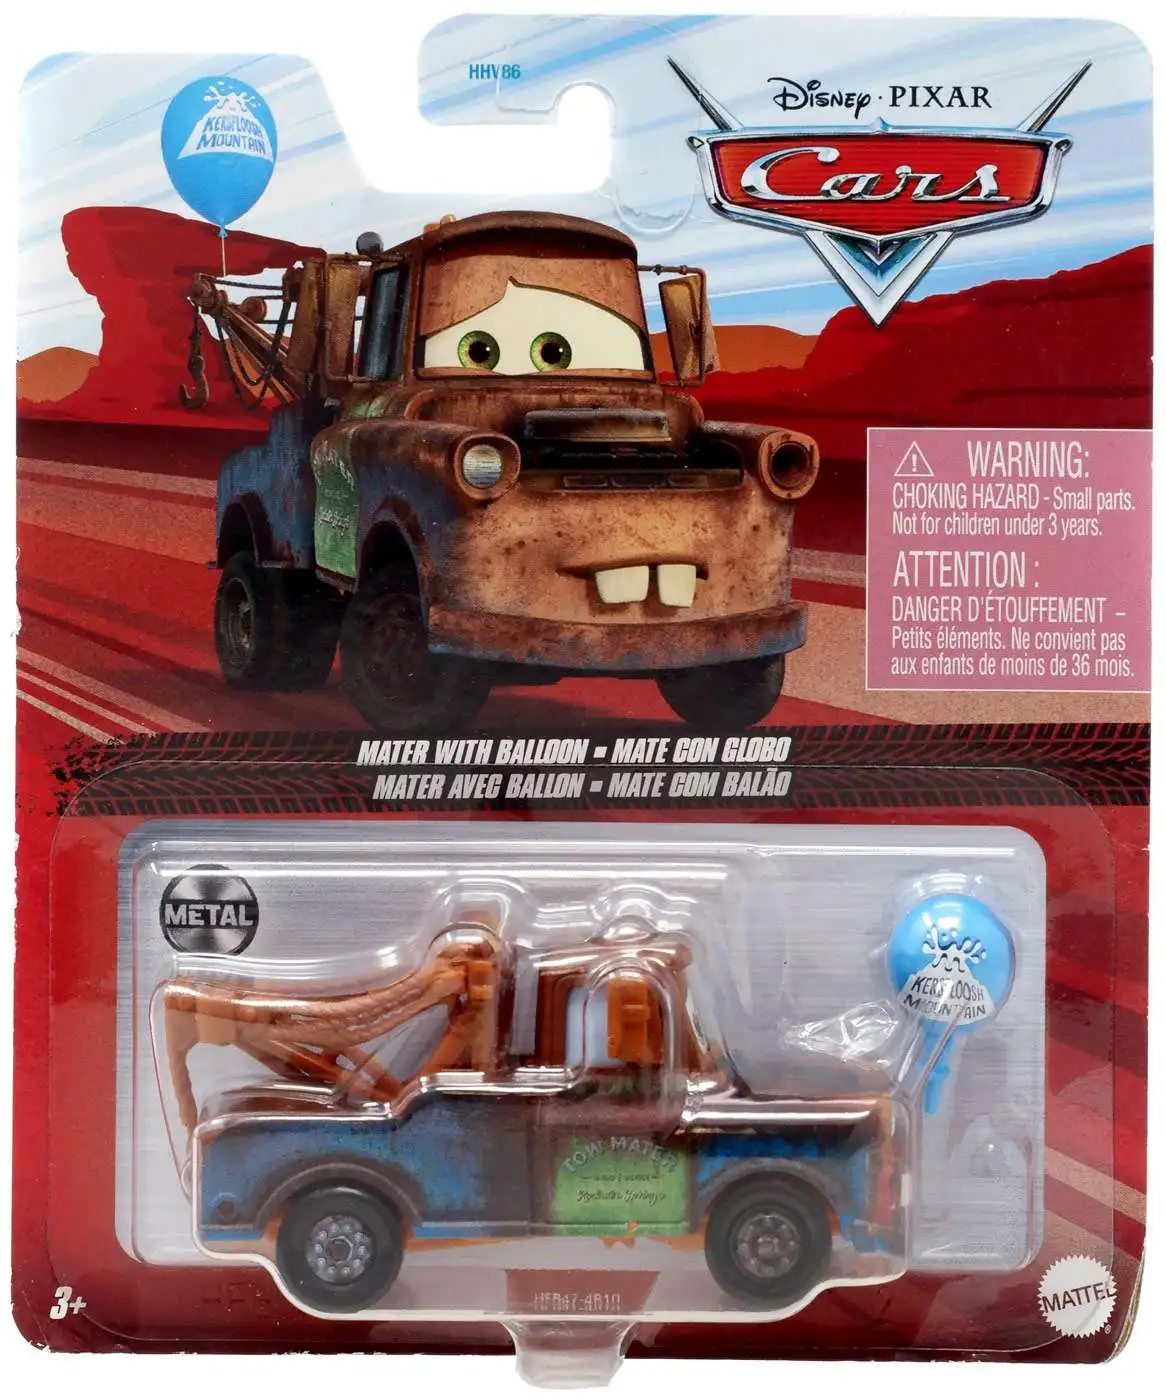 Disney Pixar Cars Cars 3 Metal Mater 155 Diecast Car with Balloon